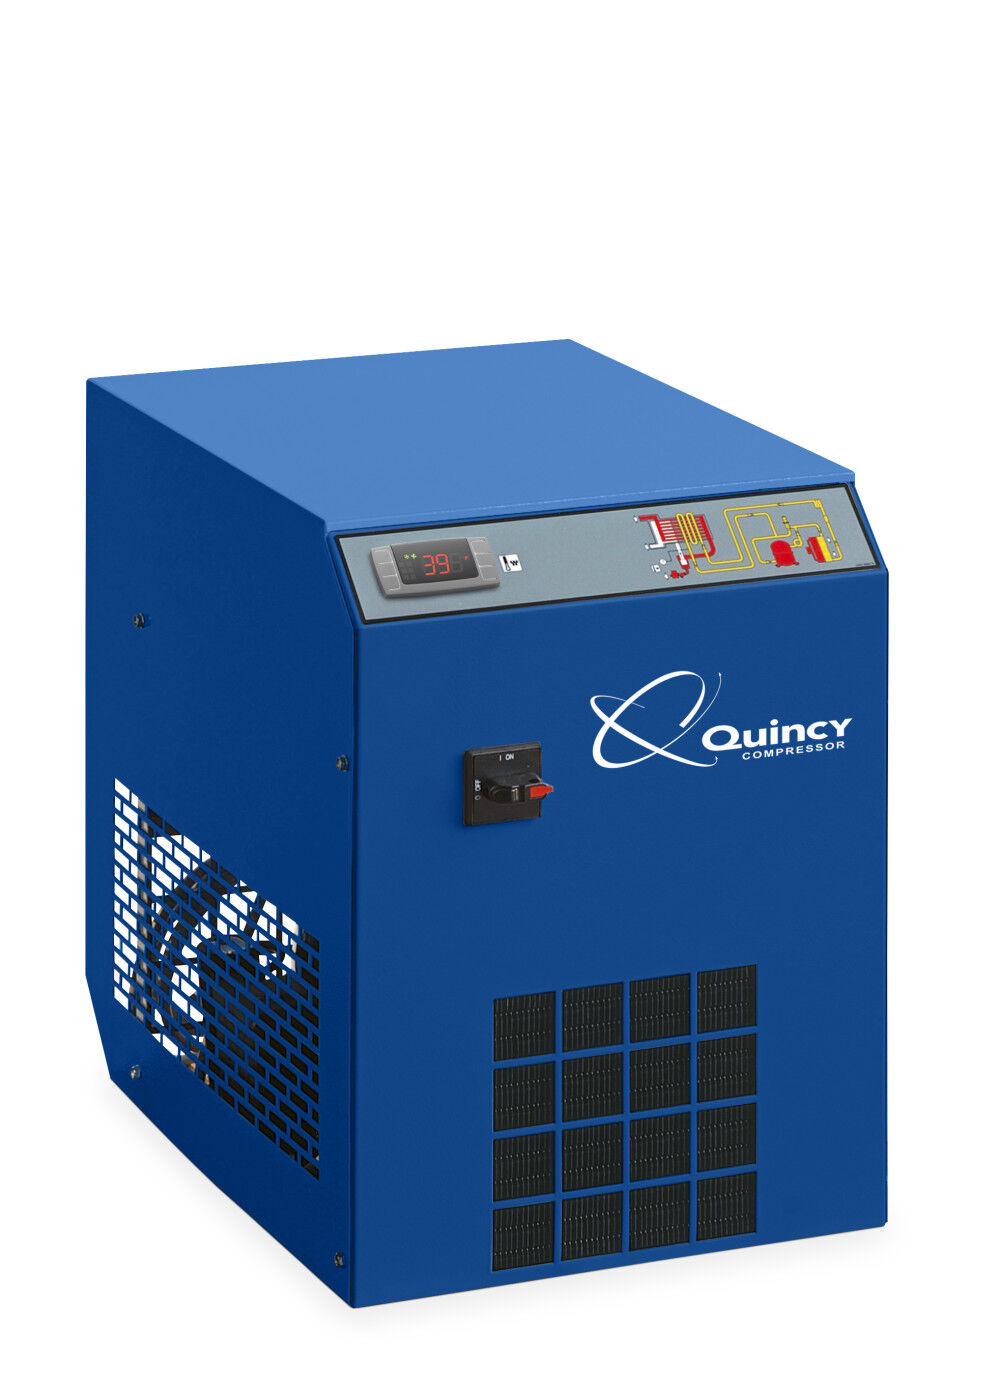 Quincy QPNC-42 Refrigerated Air Dryer Non Cycling 42 CFM 115V 1Ph